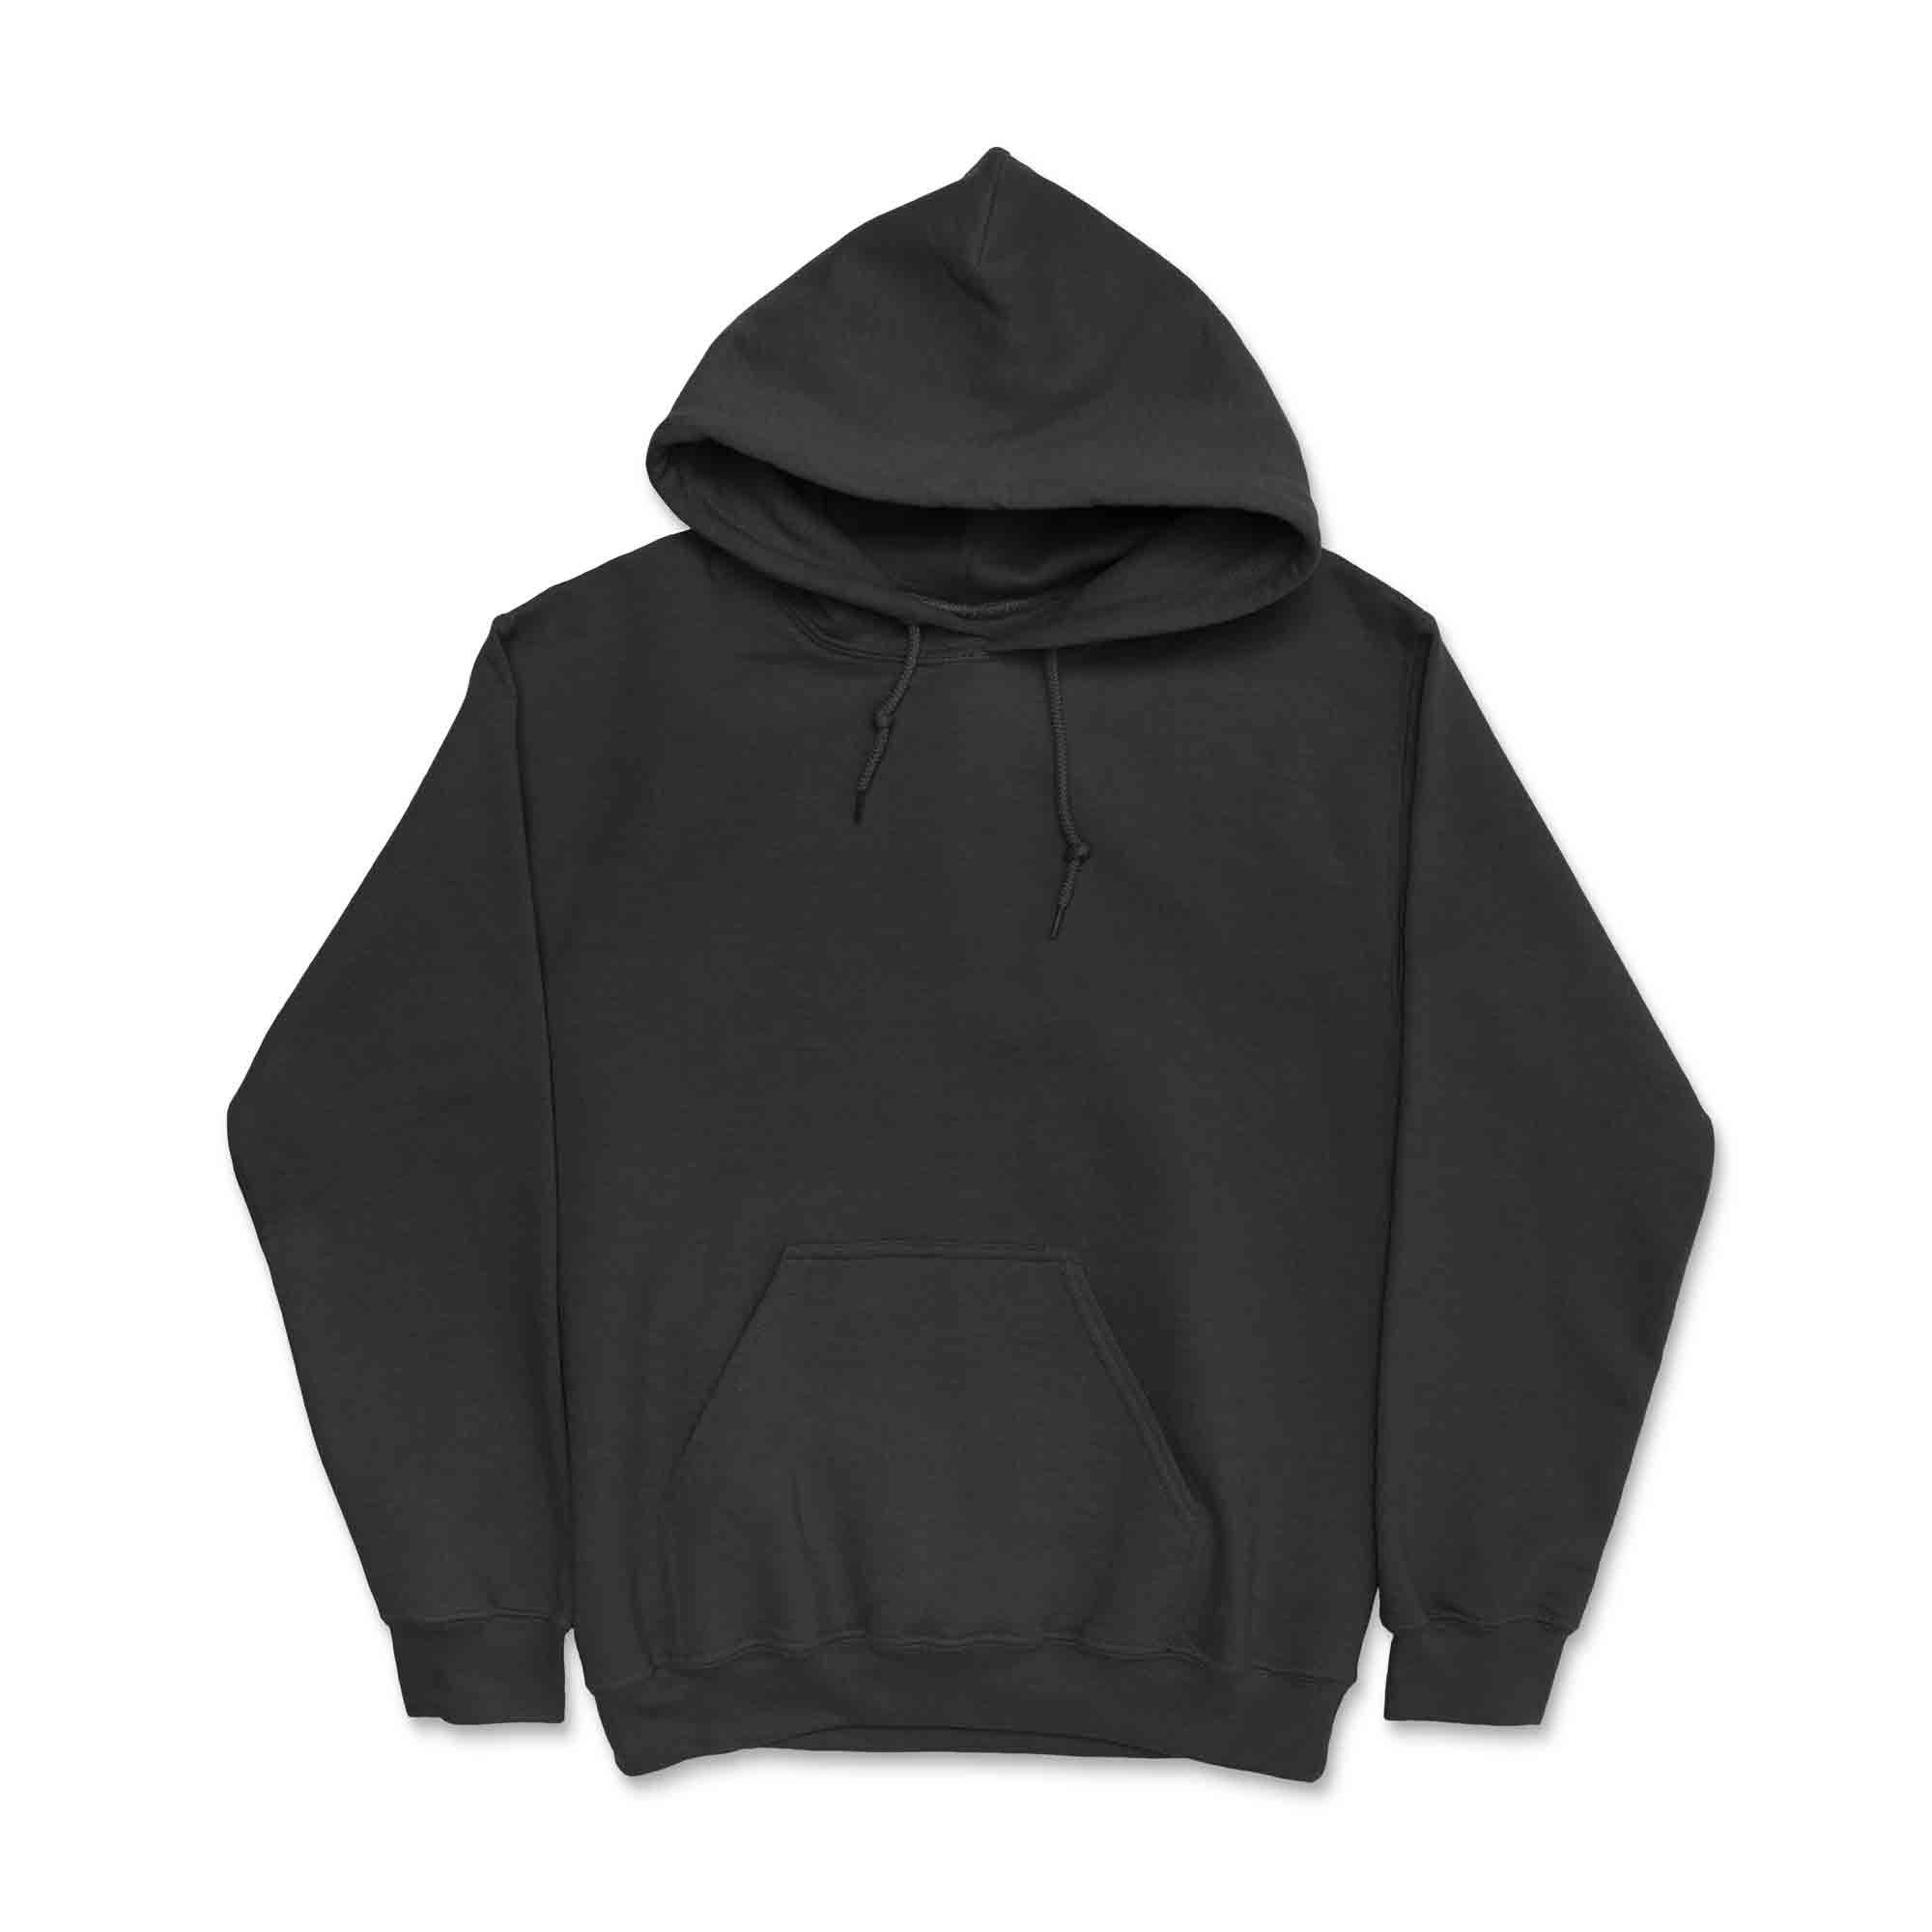 CLOSEOUT! Design Your Own Custom Sweatshirt